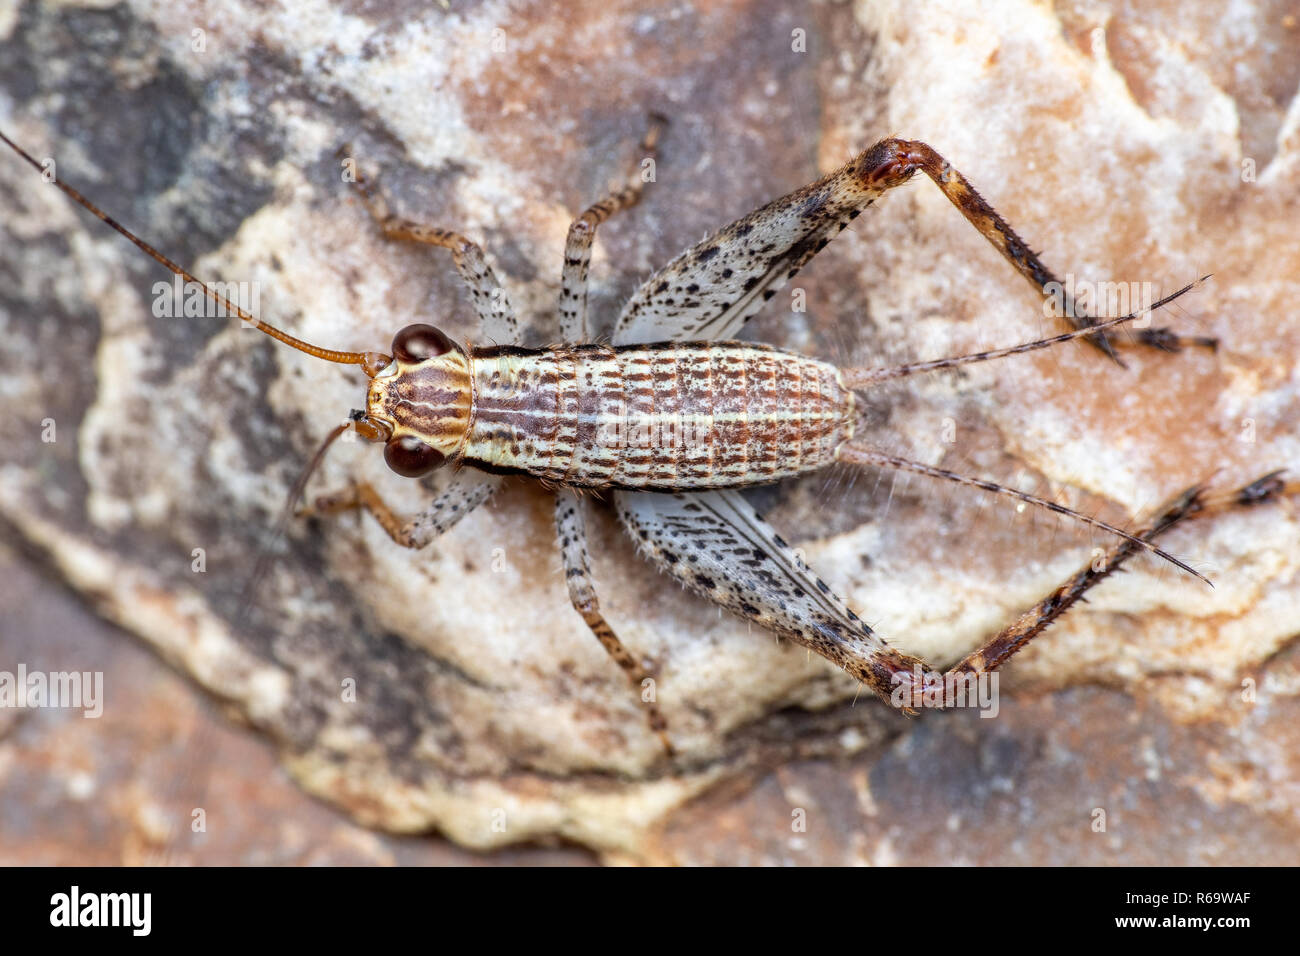 Striped true cricket (gryllidae) foraging on a rainforest floor in Queensland, Australia Stock Photo